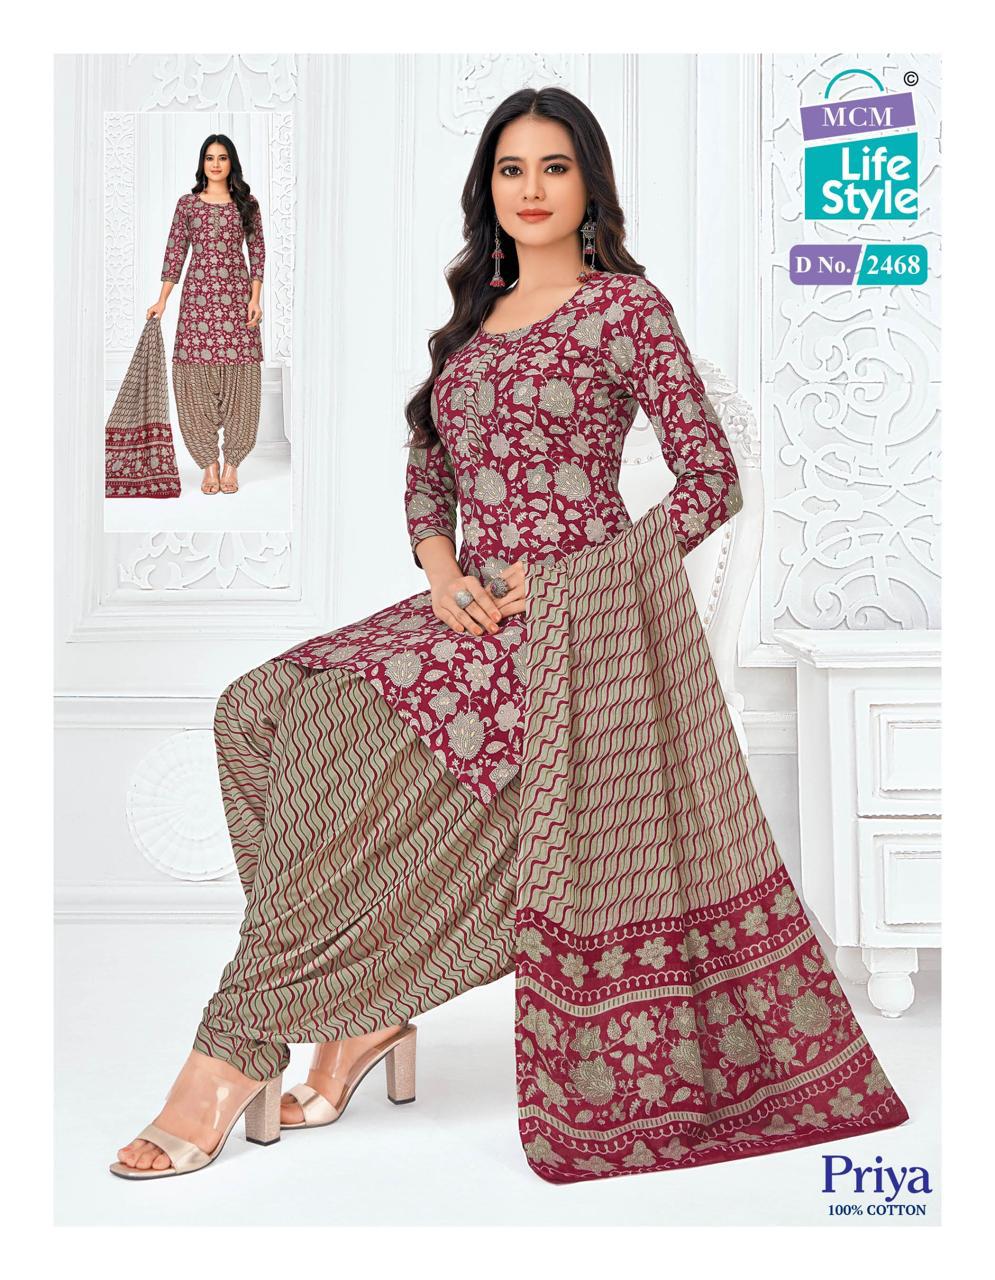 Priya Vol 24 Mcm Lifestyle Cambric Cotton Readymade Cotton Patiyala Suits Wholesale Price